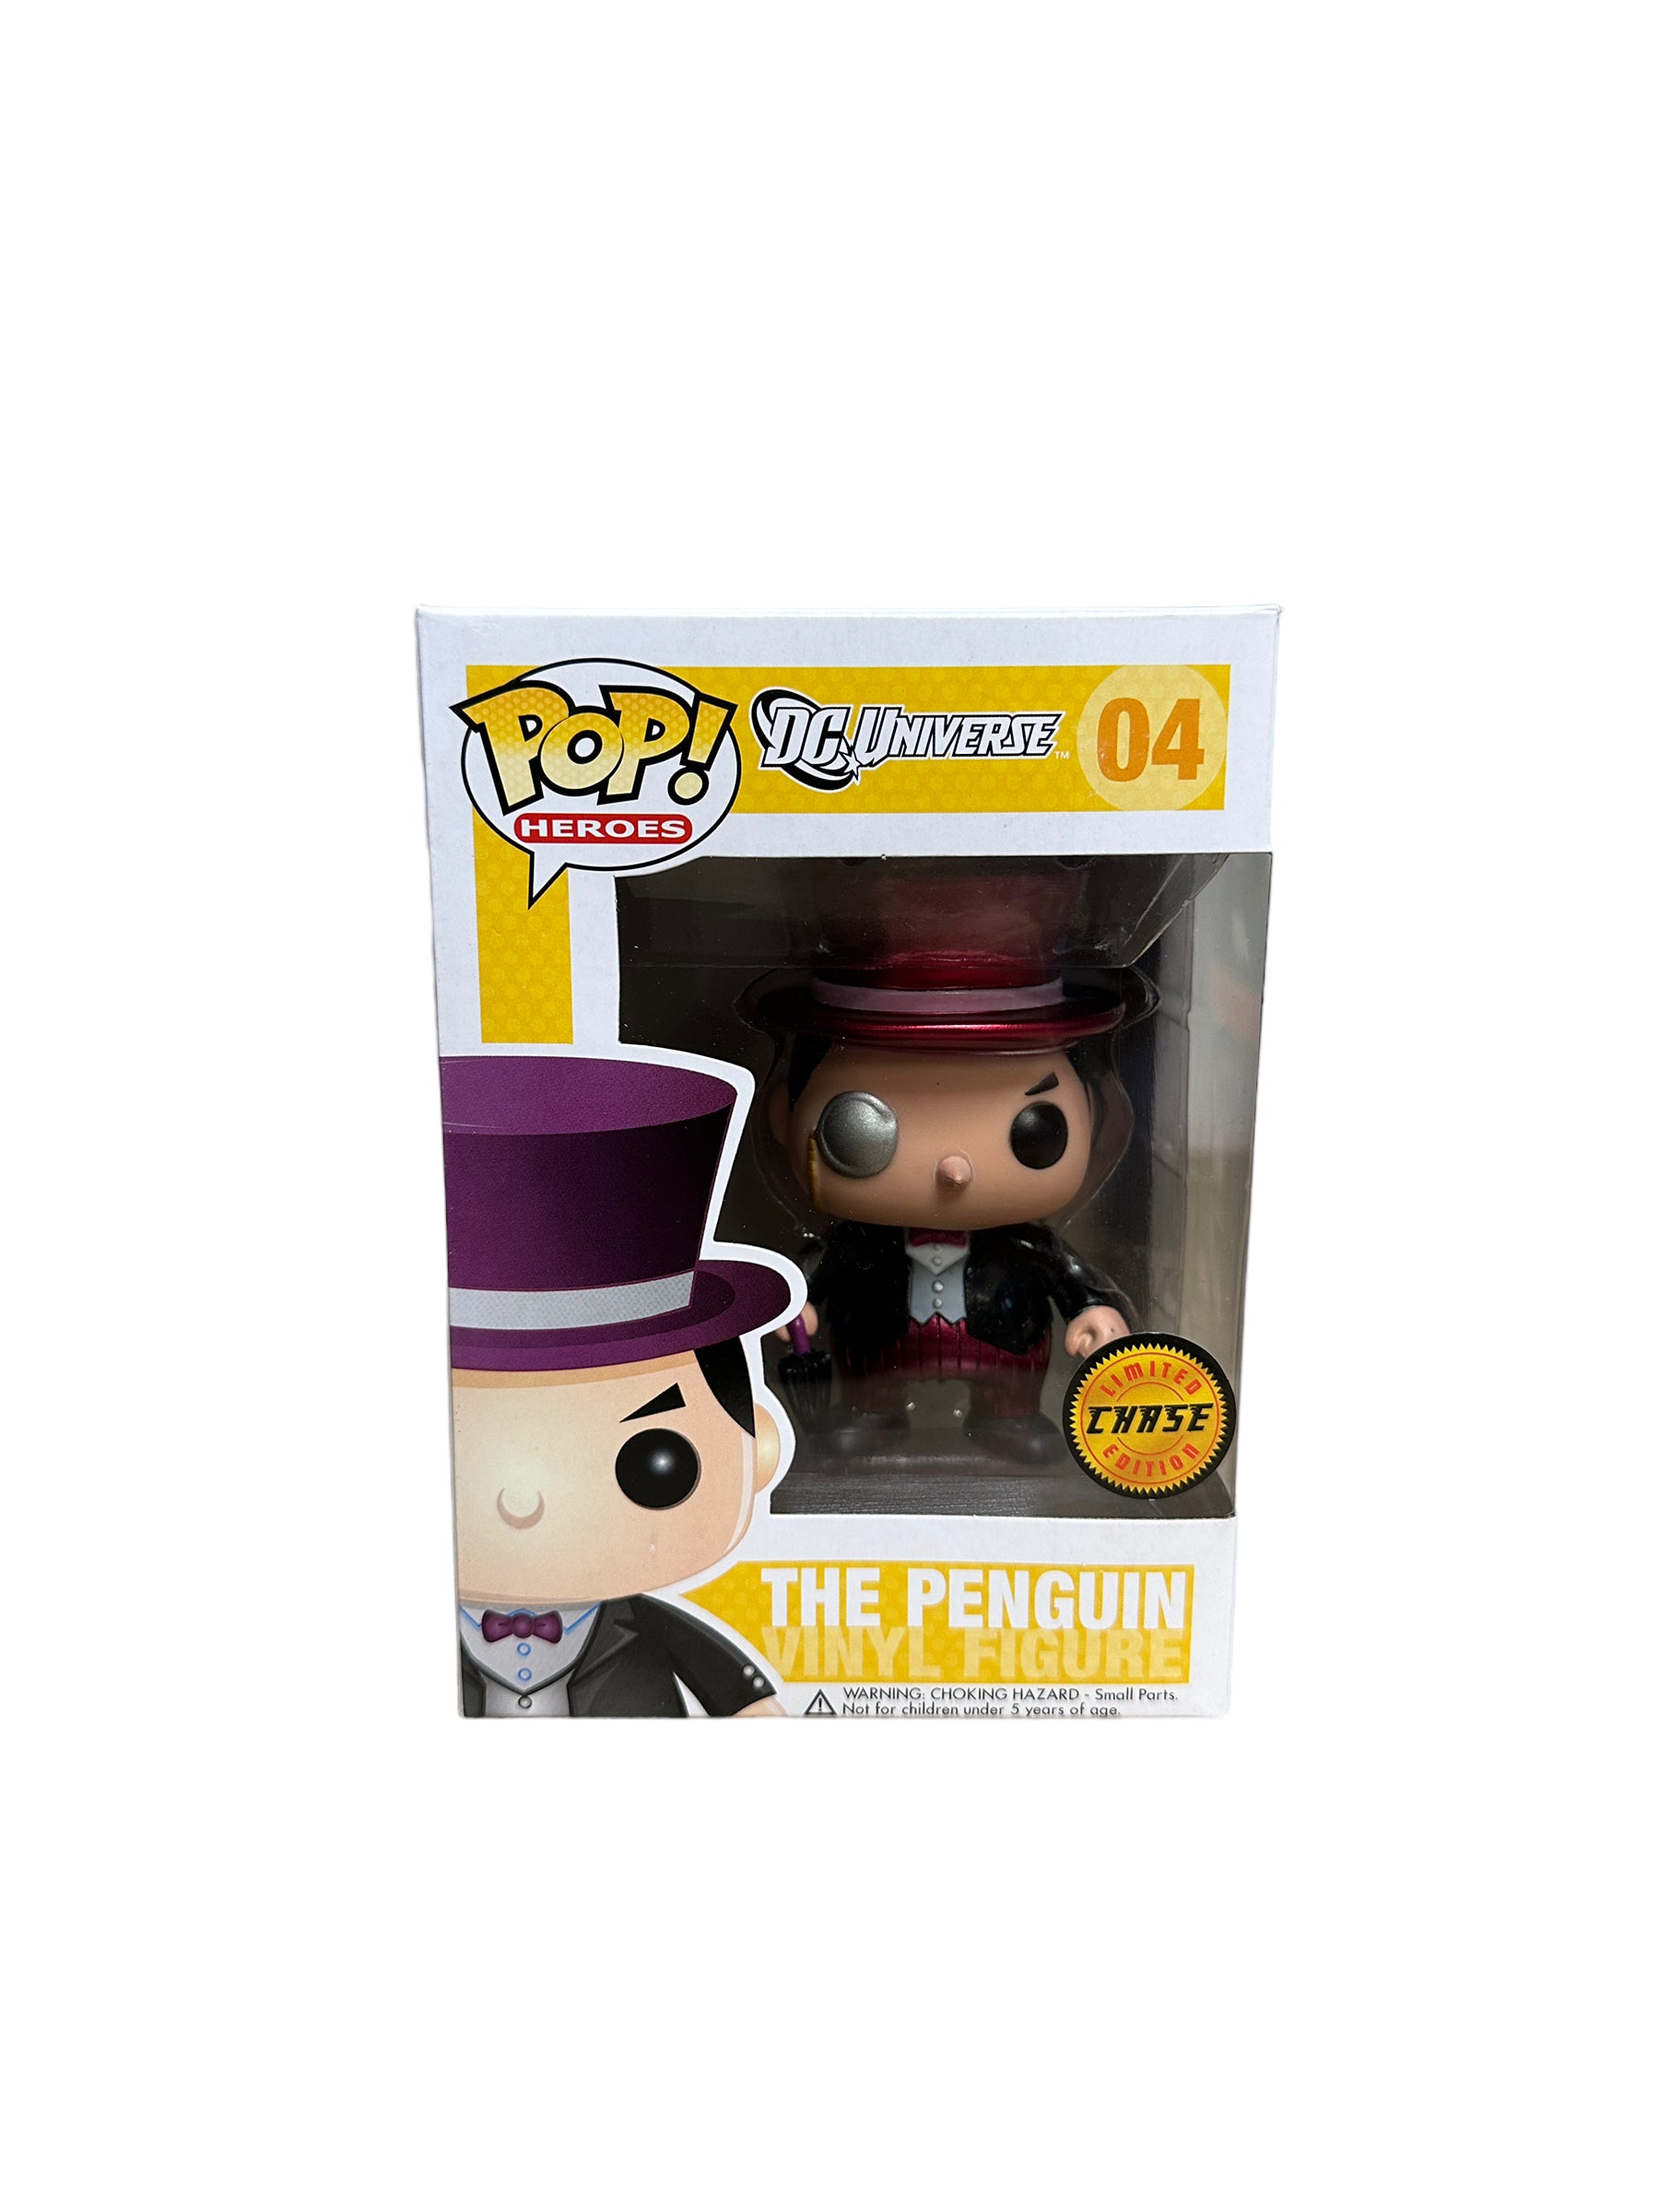 The Penguin #04 (Metallic Chase) Funko Pop! - DC Universe - 2014 Pop! - Condition 9/10